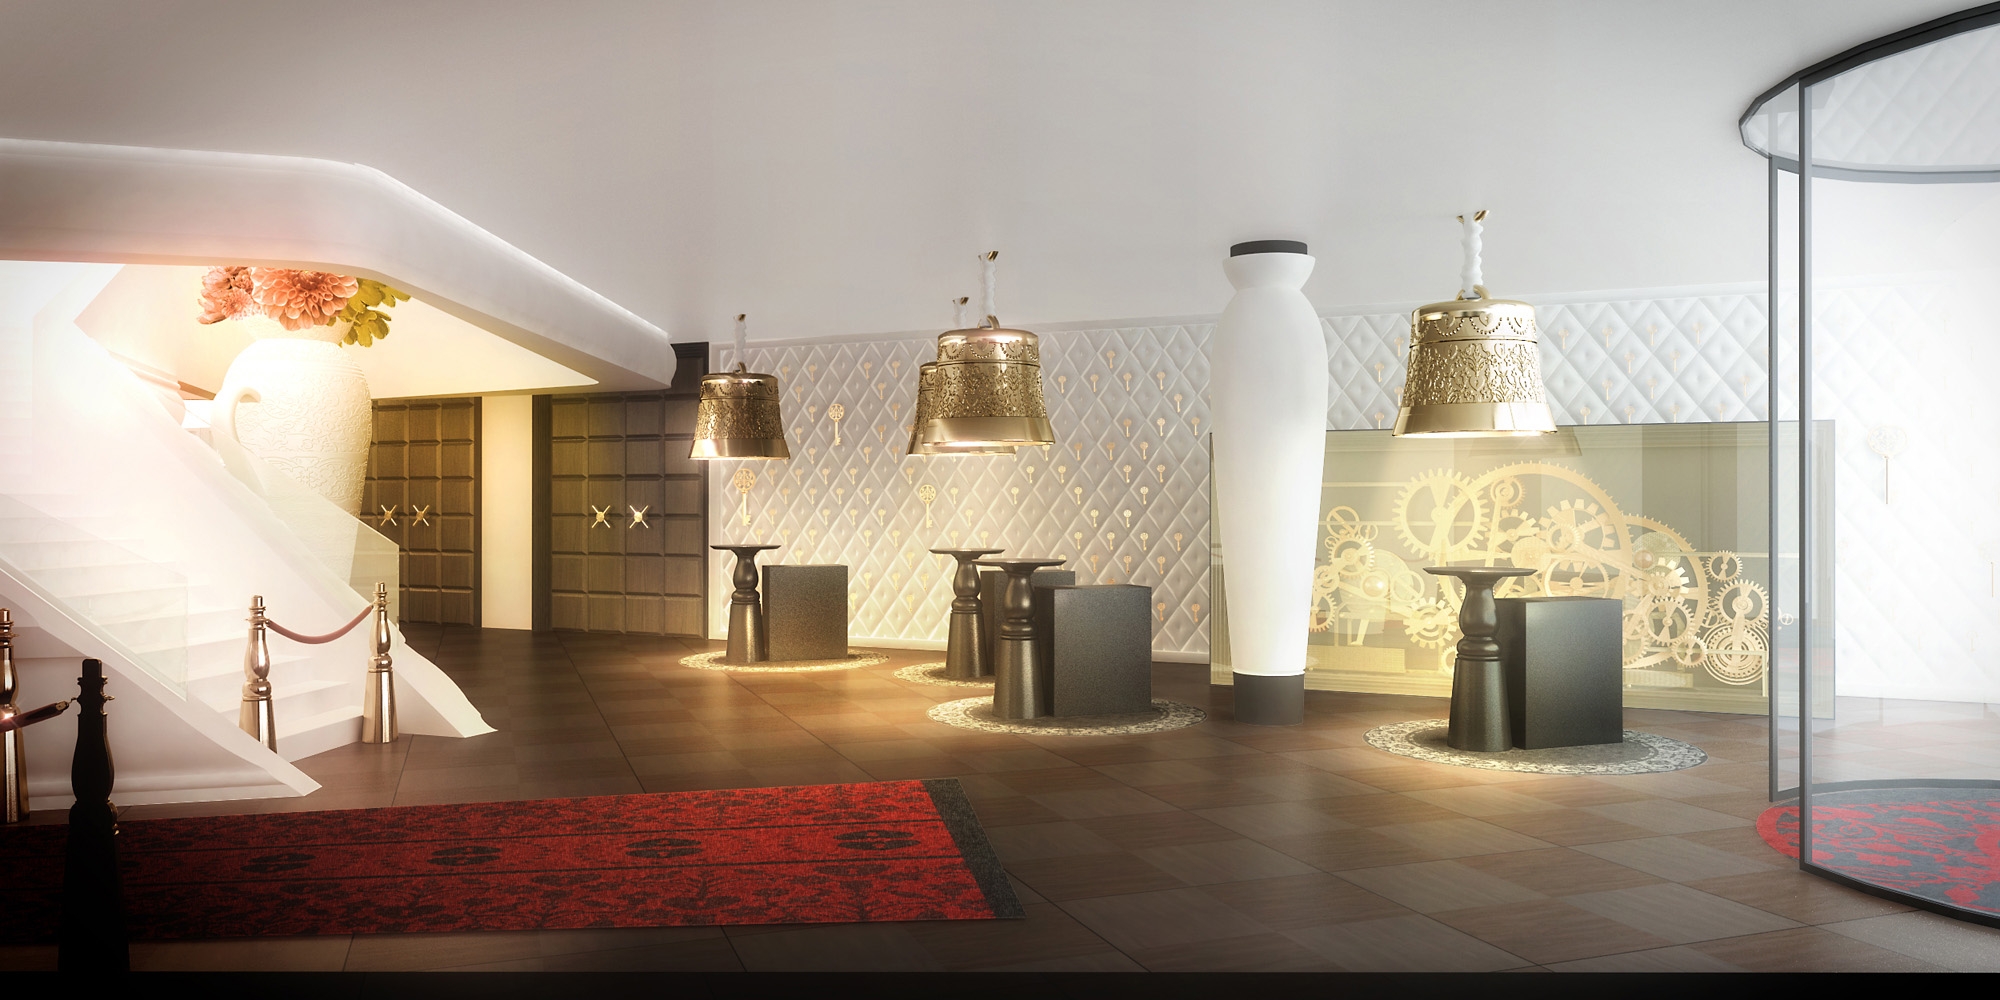 Lobby im Hotelbau-Projekt Kameha Grand Zürich: Eröffnung ist im Frühling 2015